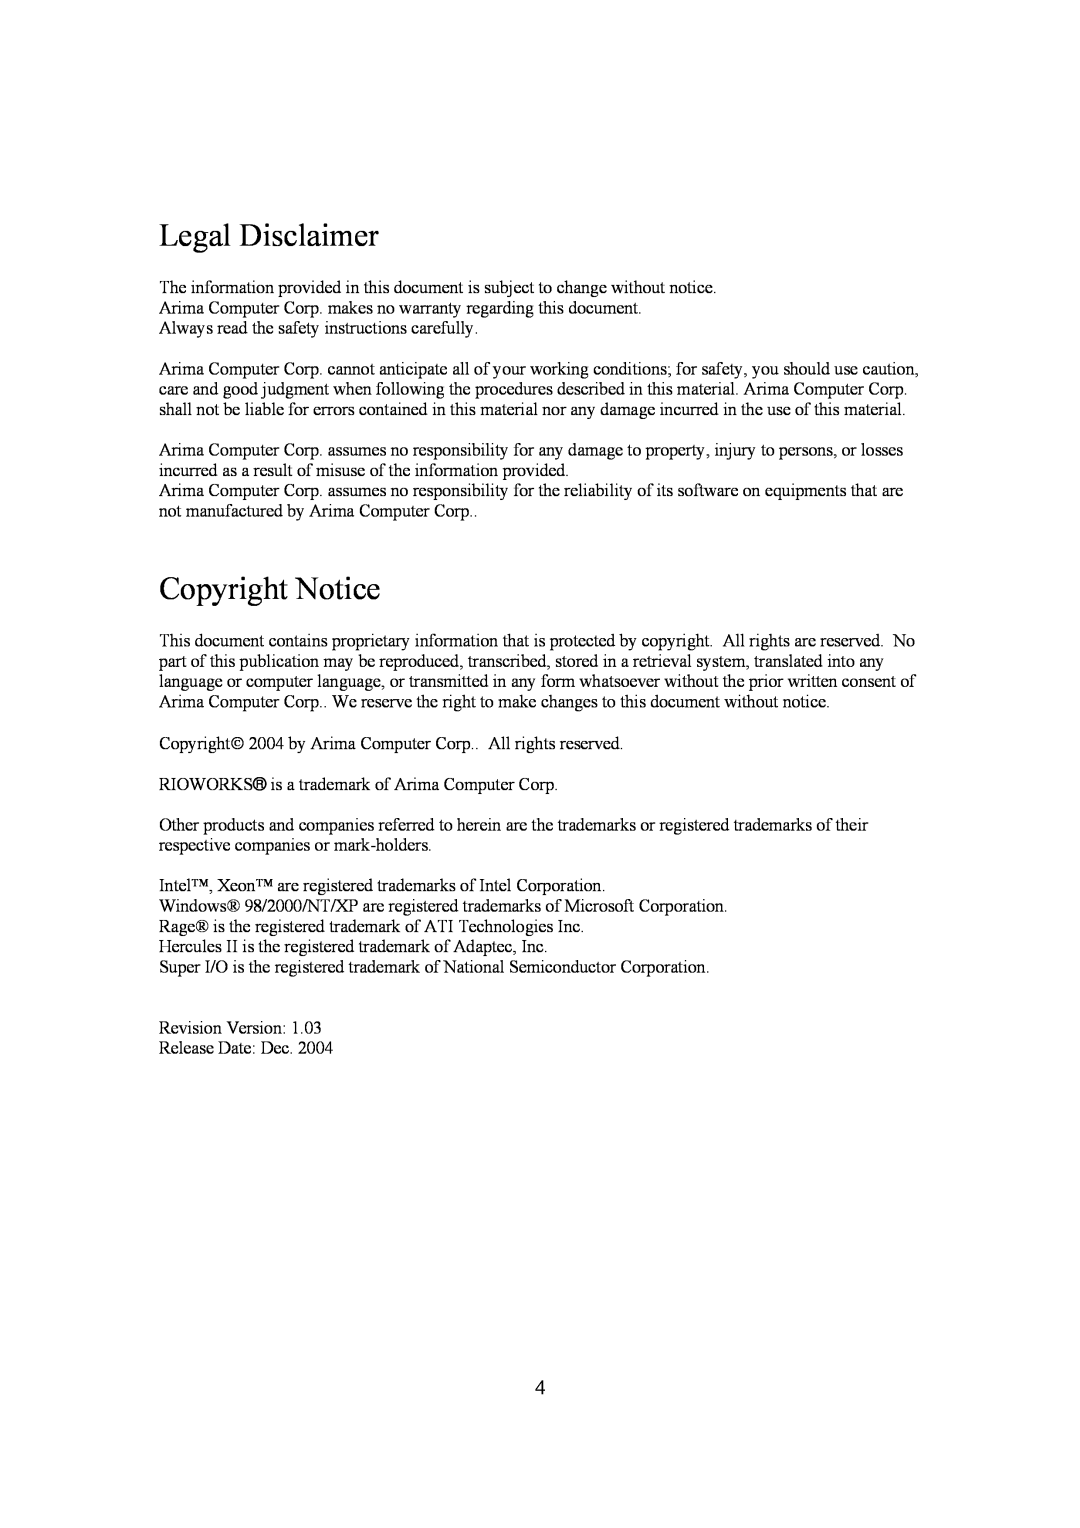 Intel LH500 user manual Legal Disclaimer, Copyright Notice 